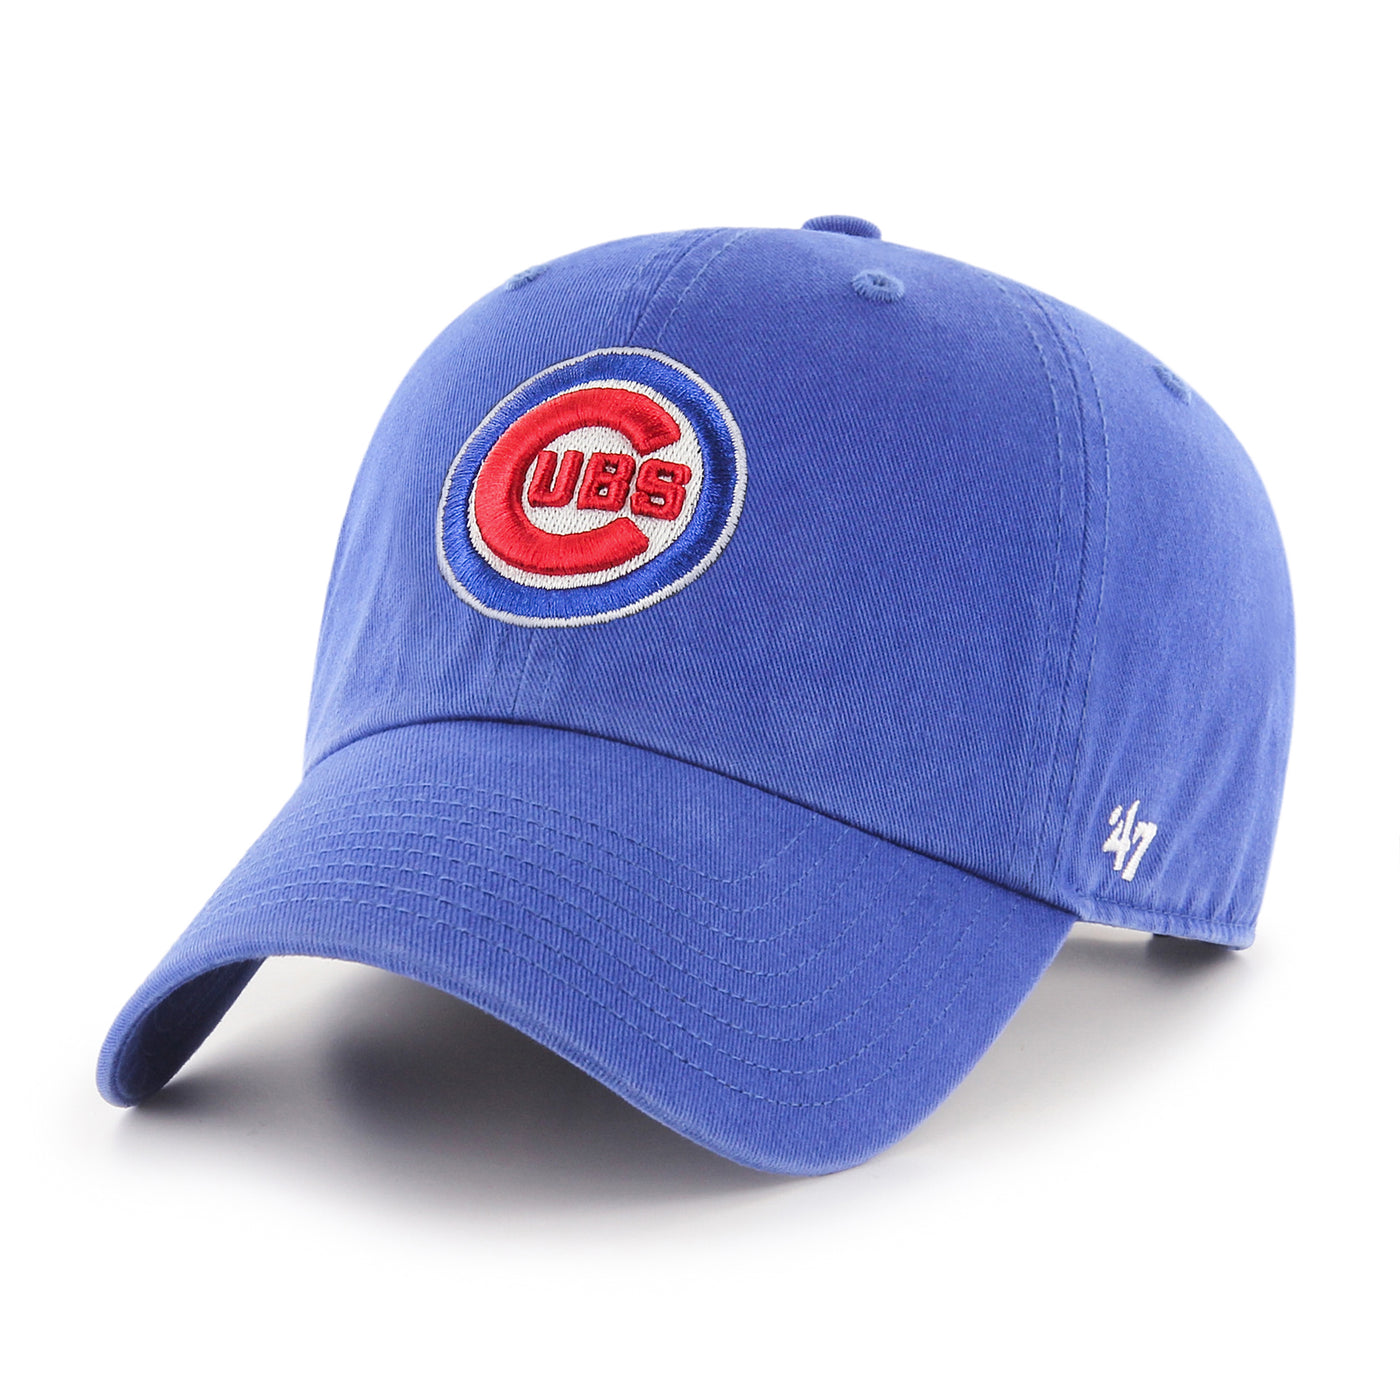 CHICAGO CUBS '47 BULLSEYE ROYAL BLUE ADJUSTABLE CAP